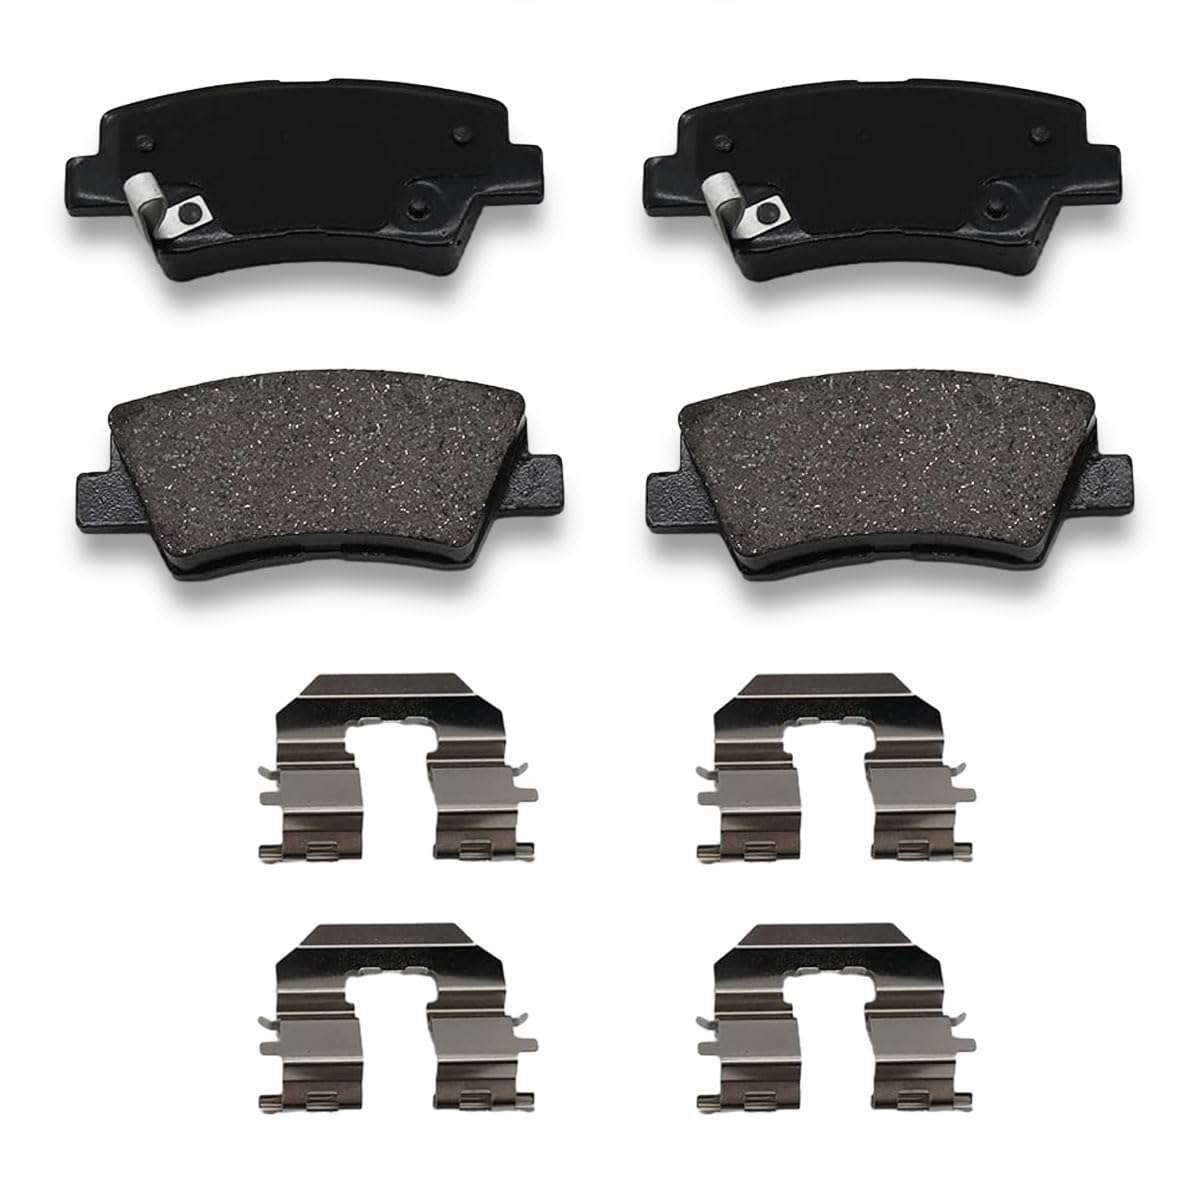 Ceramic Rear Brake Pads Set Compatible with Hyundai Sonata/Elantra/Accent/Veloster,Kia Rio/Optima Hybird/Soul EV/Soul/Cadenza/Forte/Forte Koup/Forte5,Automotive Replacement Disc Brake Pads Rear